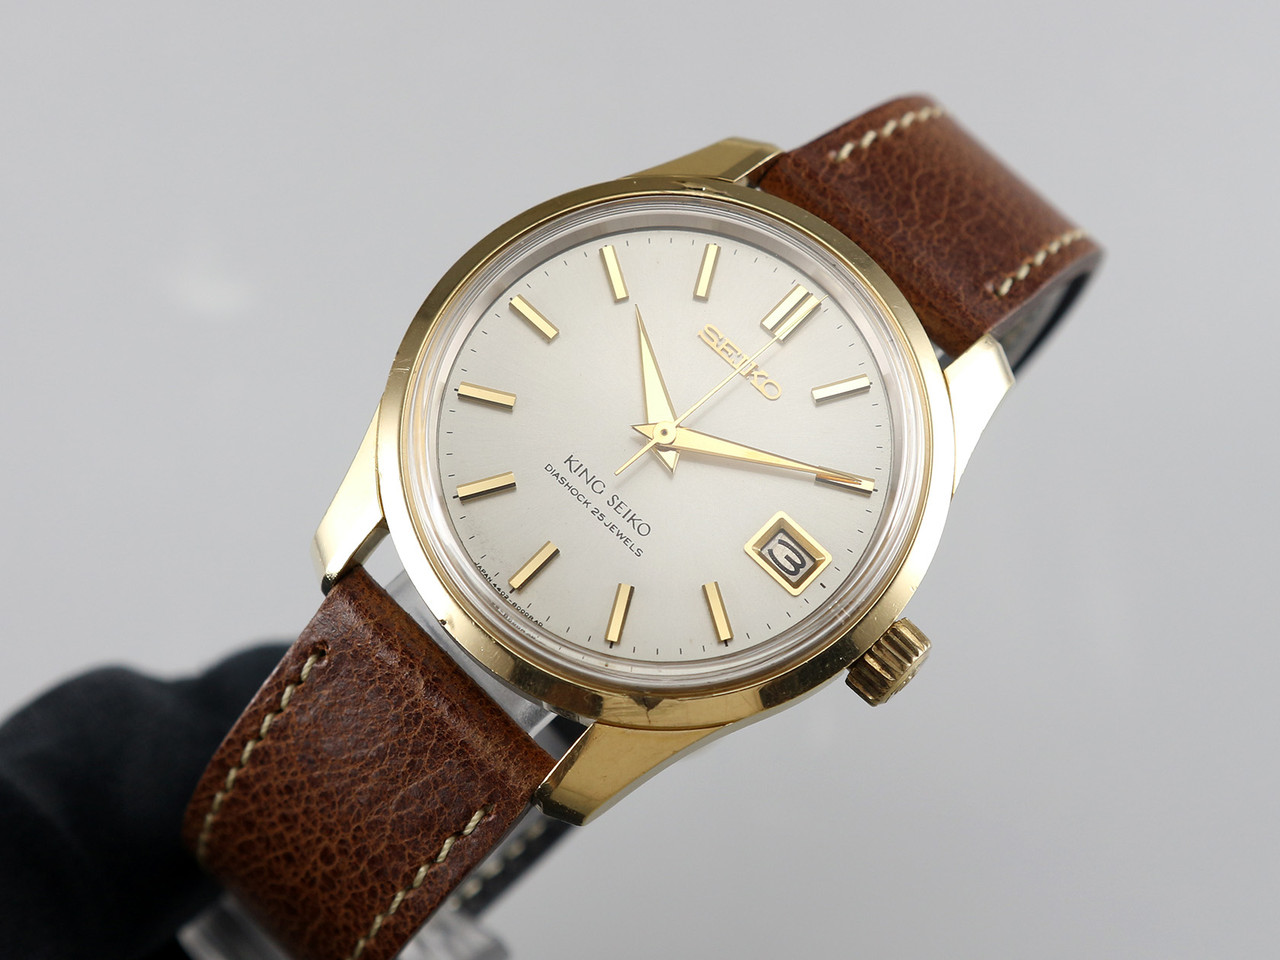 King Seiko 2nd generation VWS-1826 - Vintage Watch Services